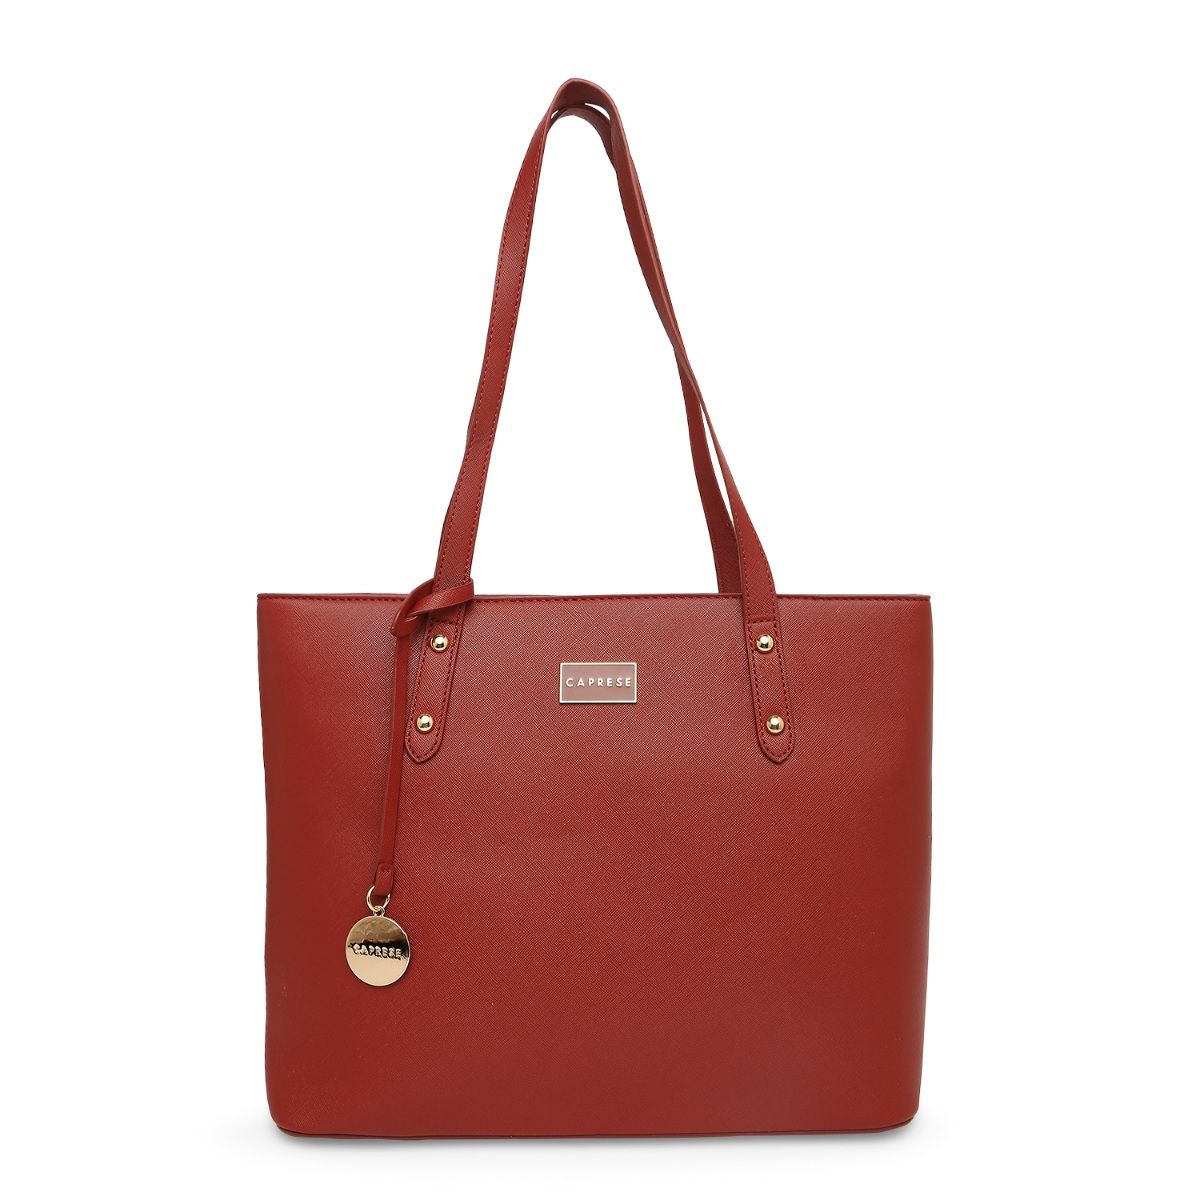 VIP's Caprese handbag brand crosses ₹100 crore in sales | Mint